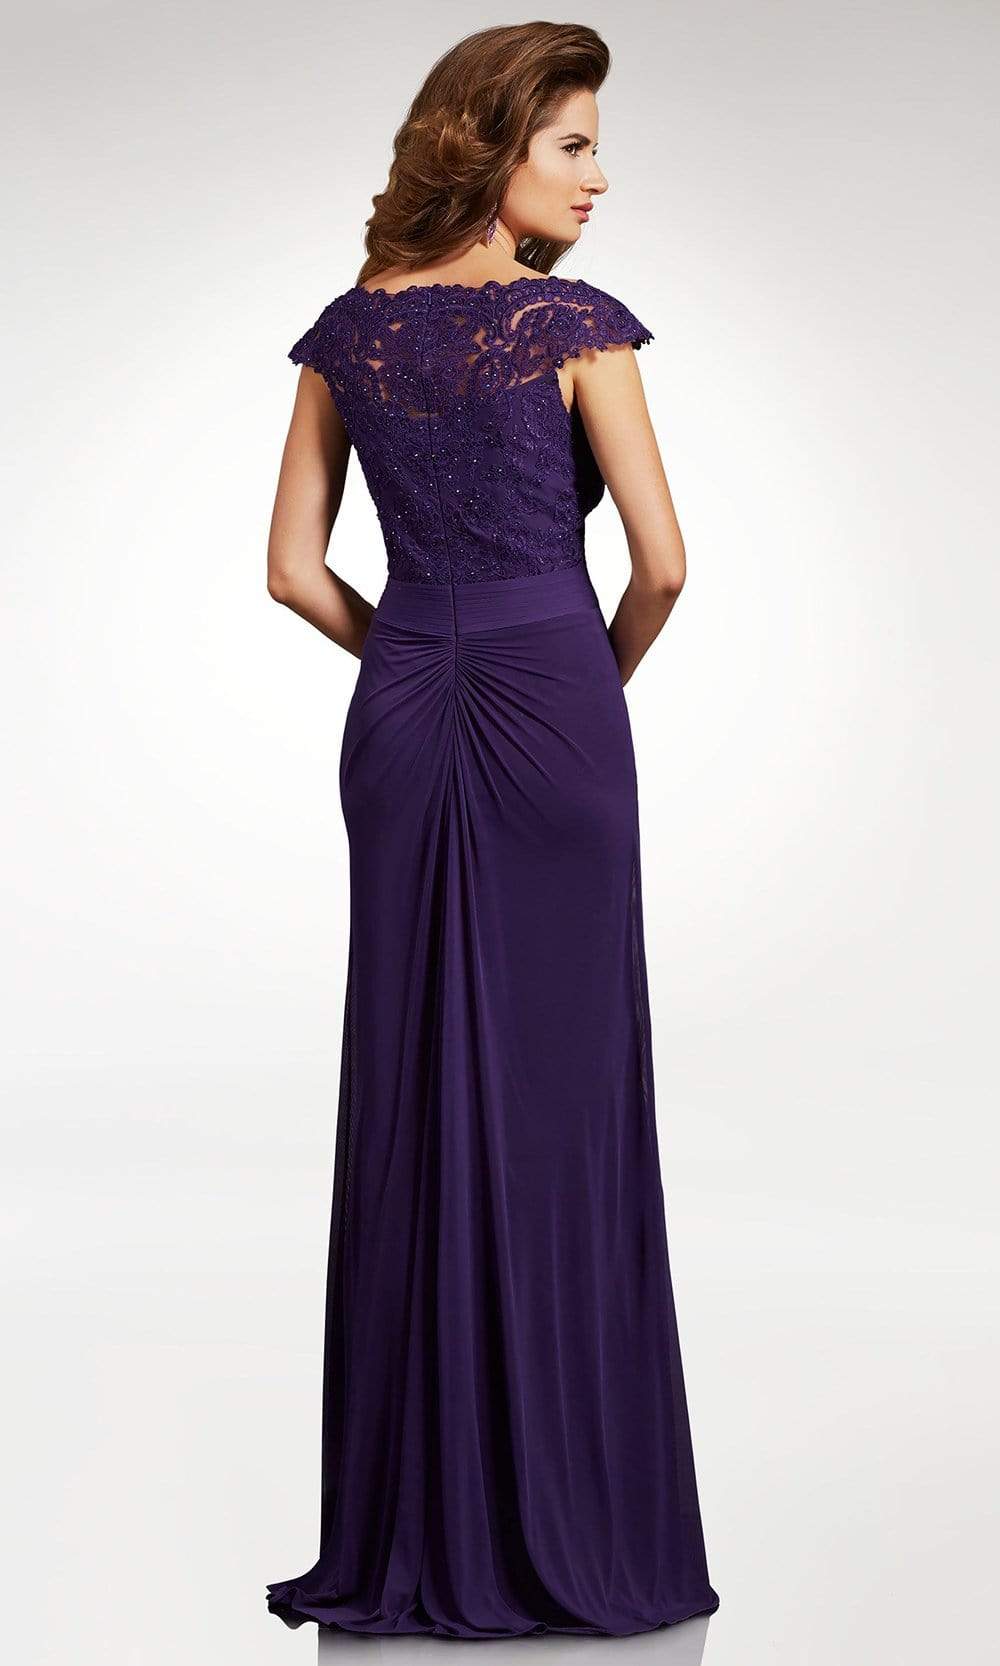 Clarisse - M6531 Lace Scalloped Bateau Chiffon Sheath Dress Special Occasion Dress